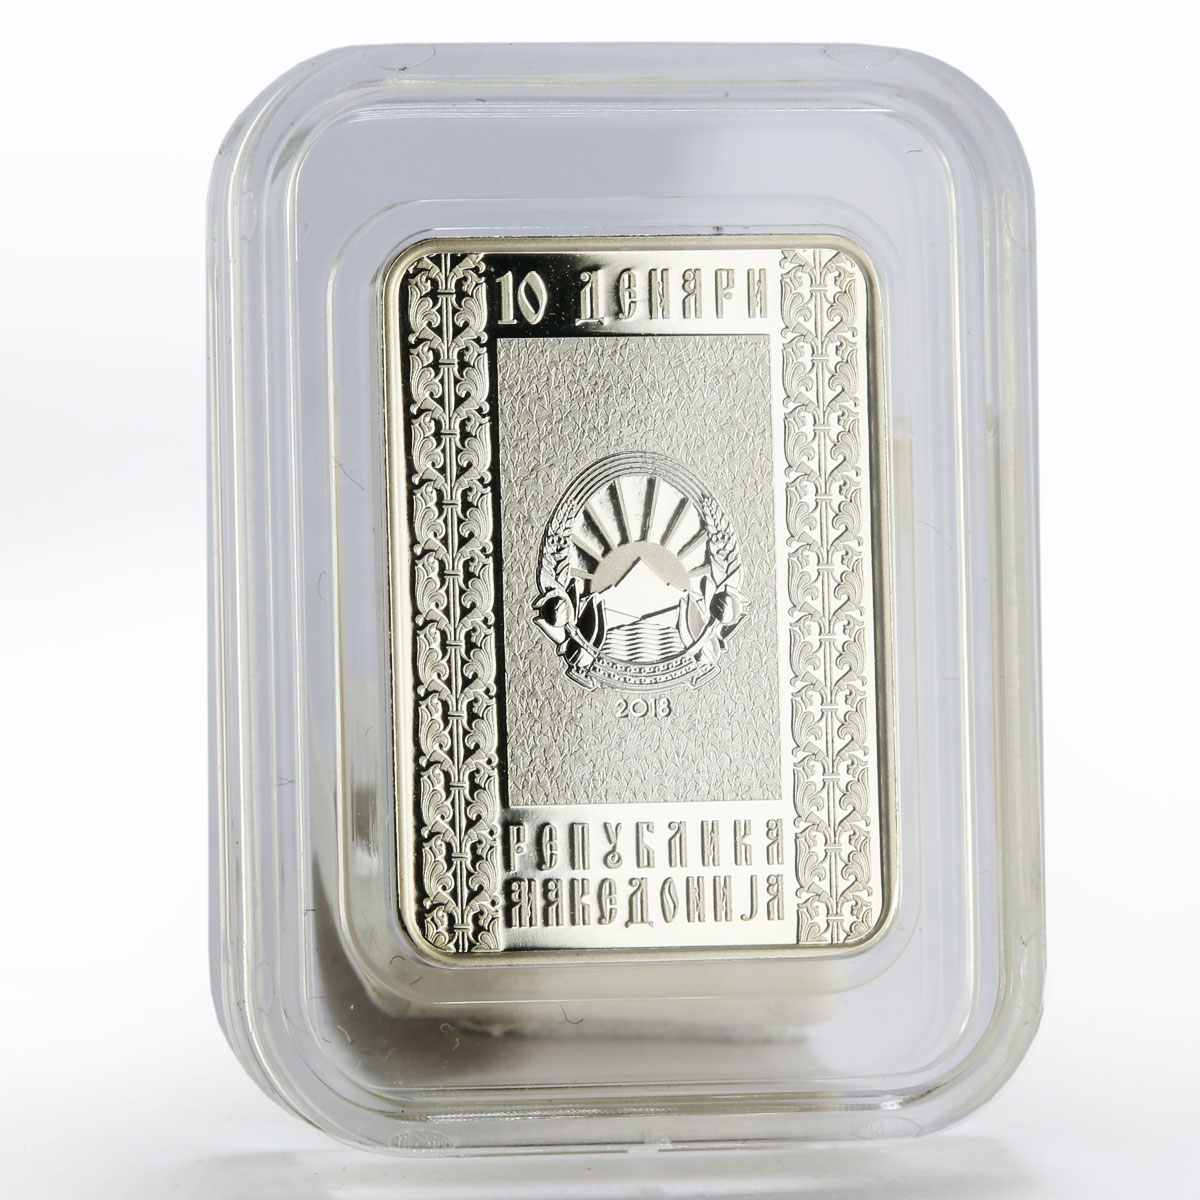 Macedonia 10 denars St Seraphim of Sarov proof silver coin 2018